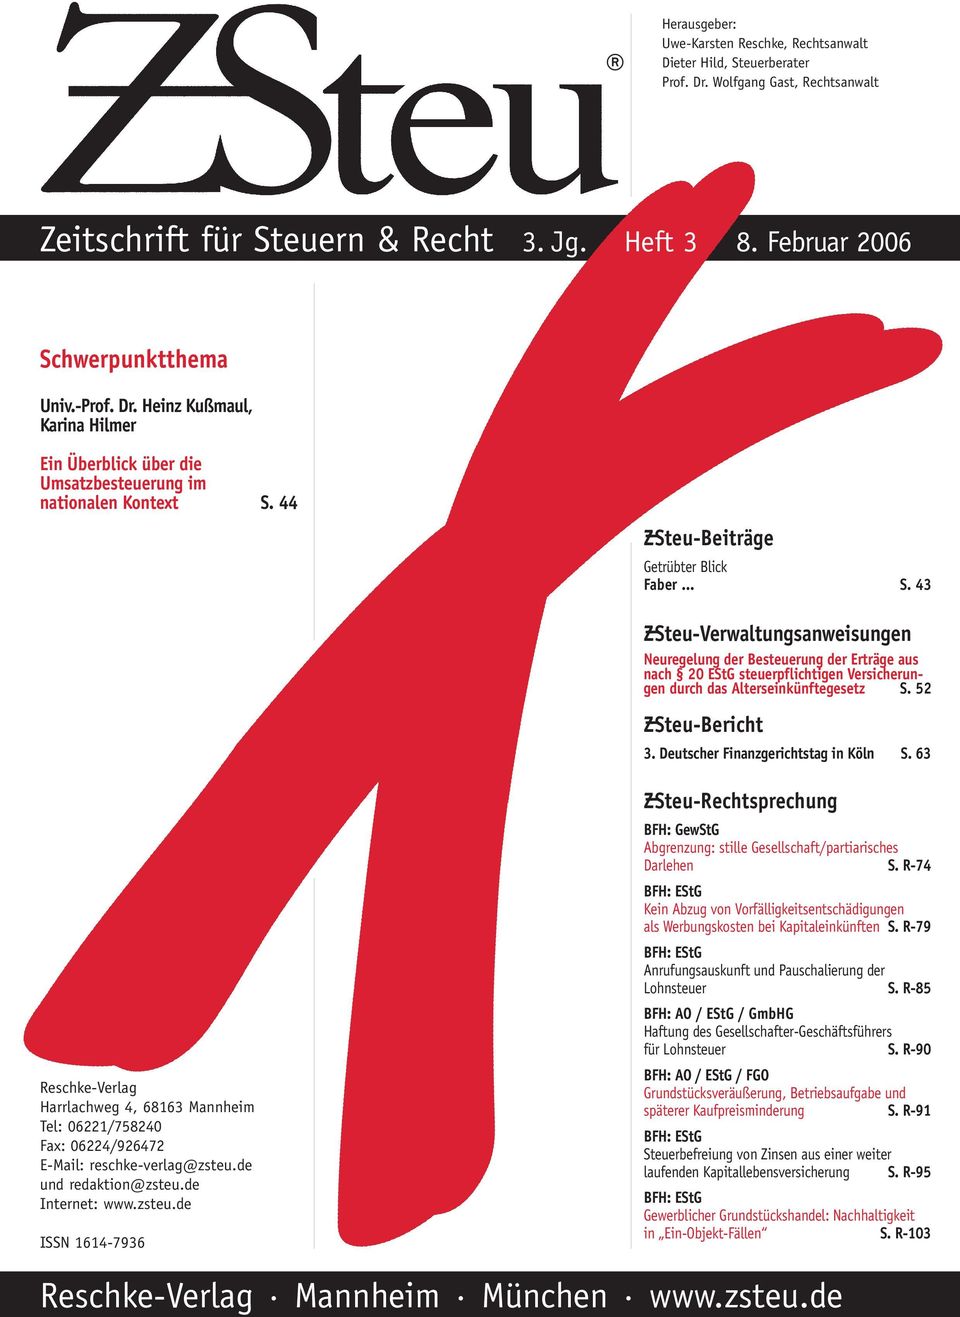 44 Z--Steu-Beiträge Getrübter Blick Faber... S.